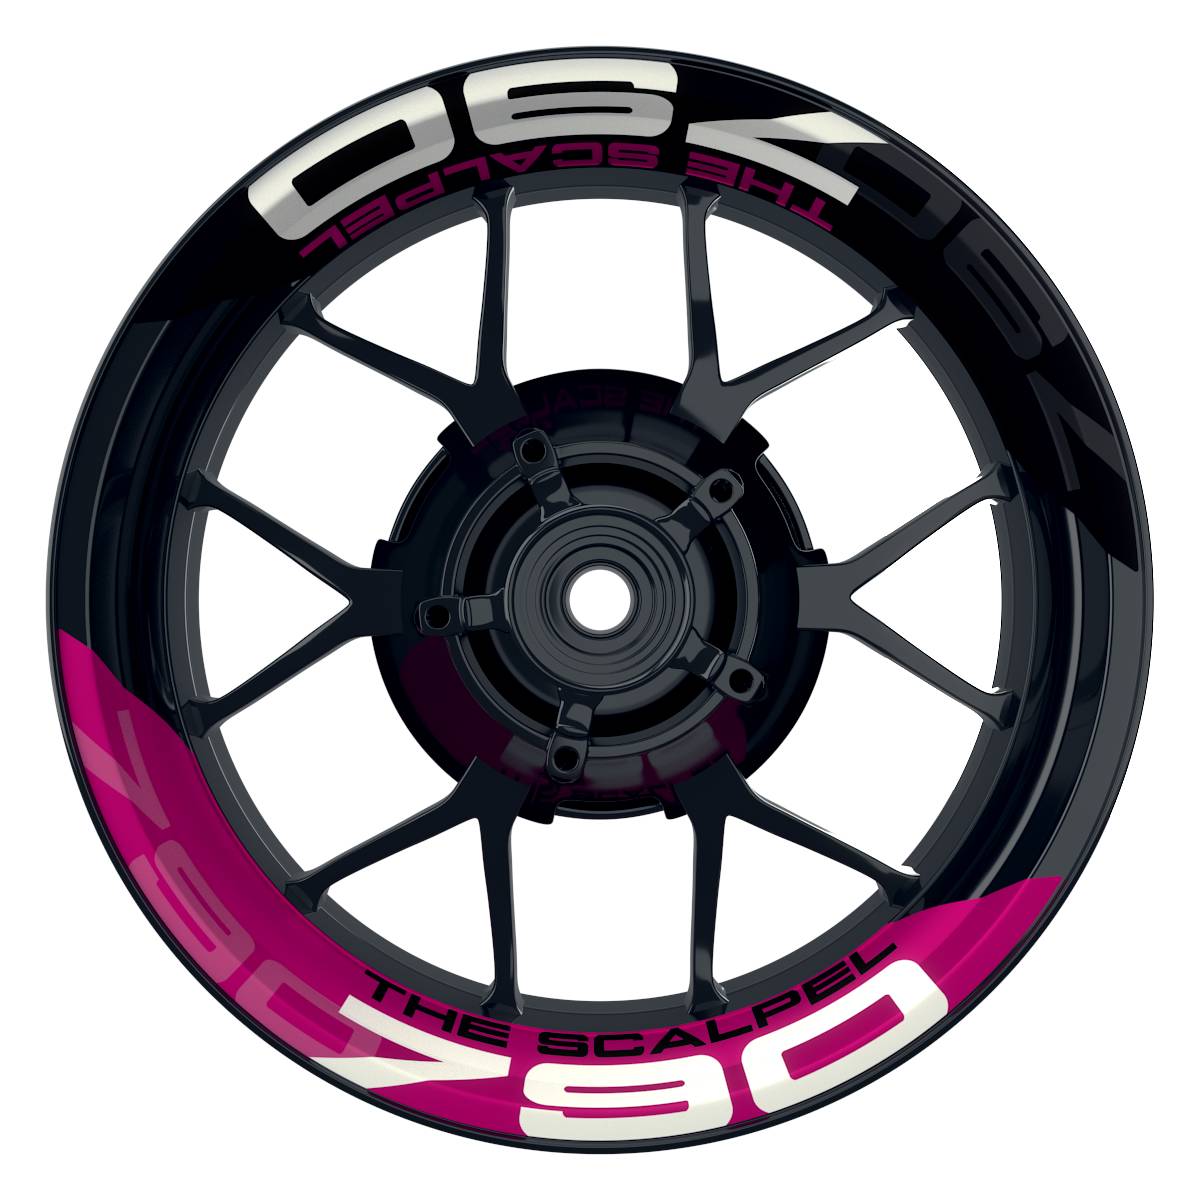 Wheelsticker Felgenaufkleber THE SCALPEL 790 Supermoto halb halb V2 schwarz pink Frontansicht